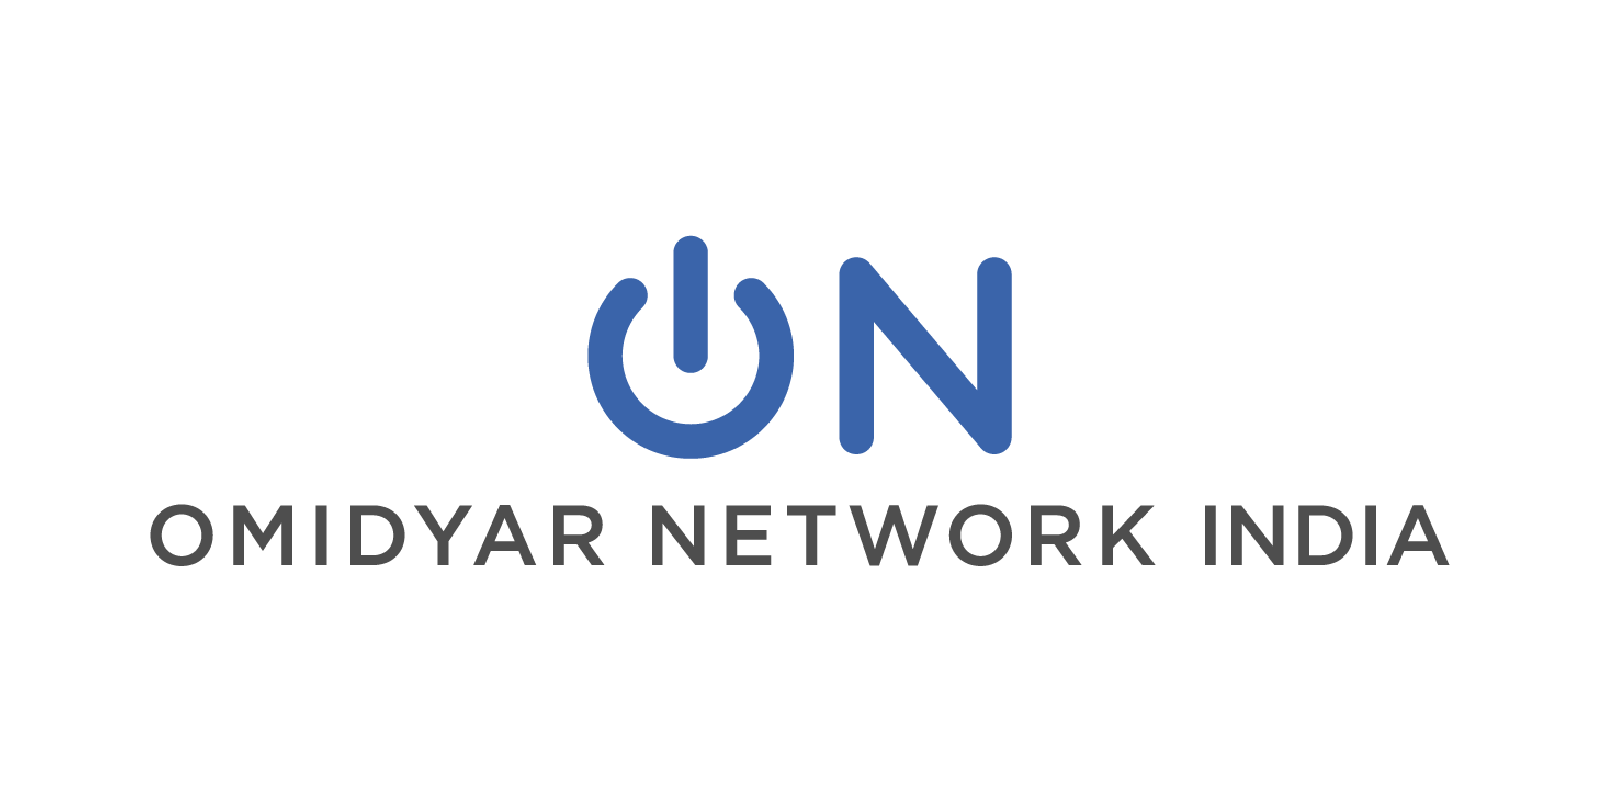 Omidyar Network India